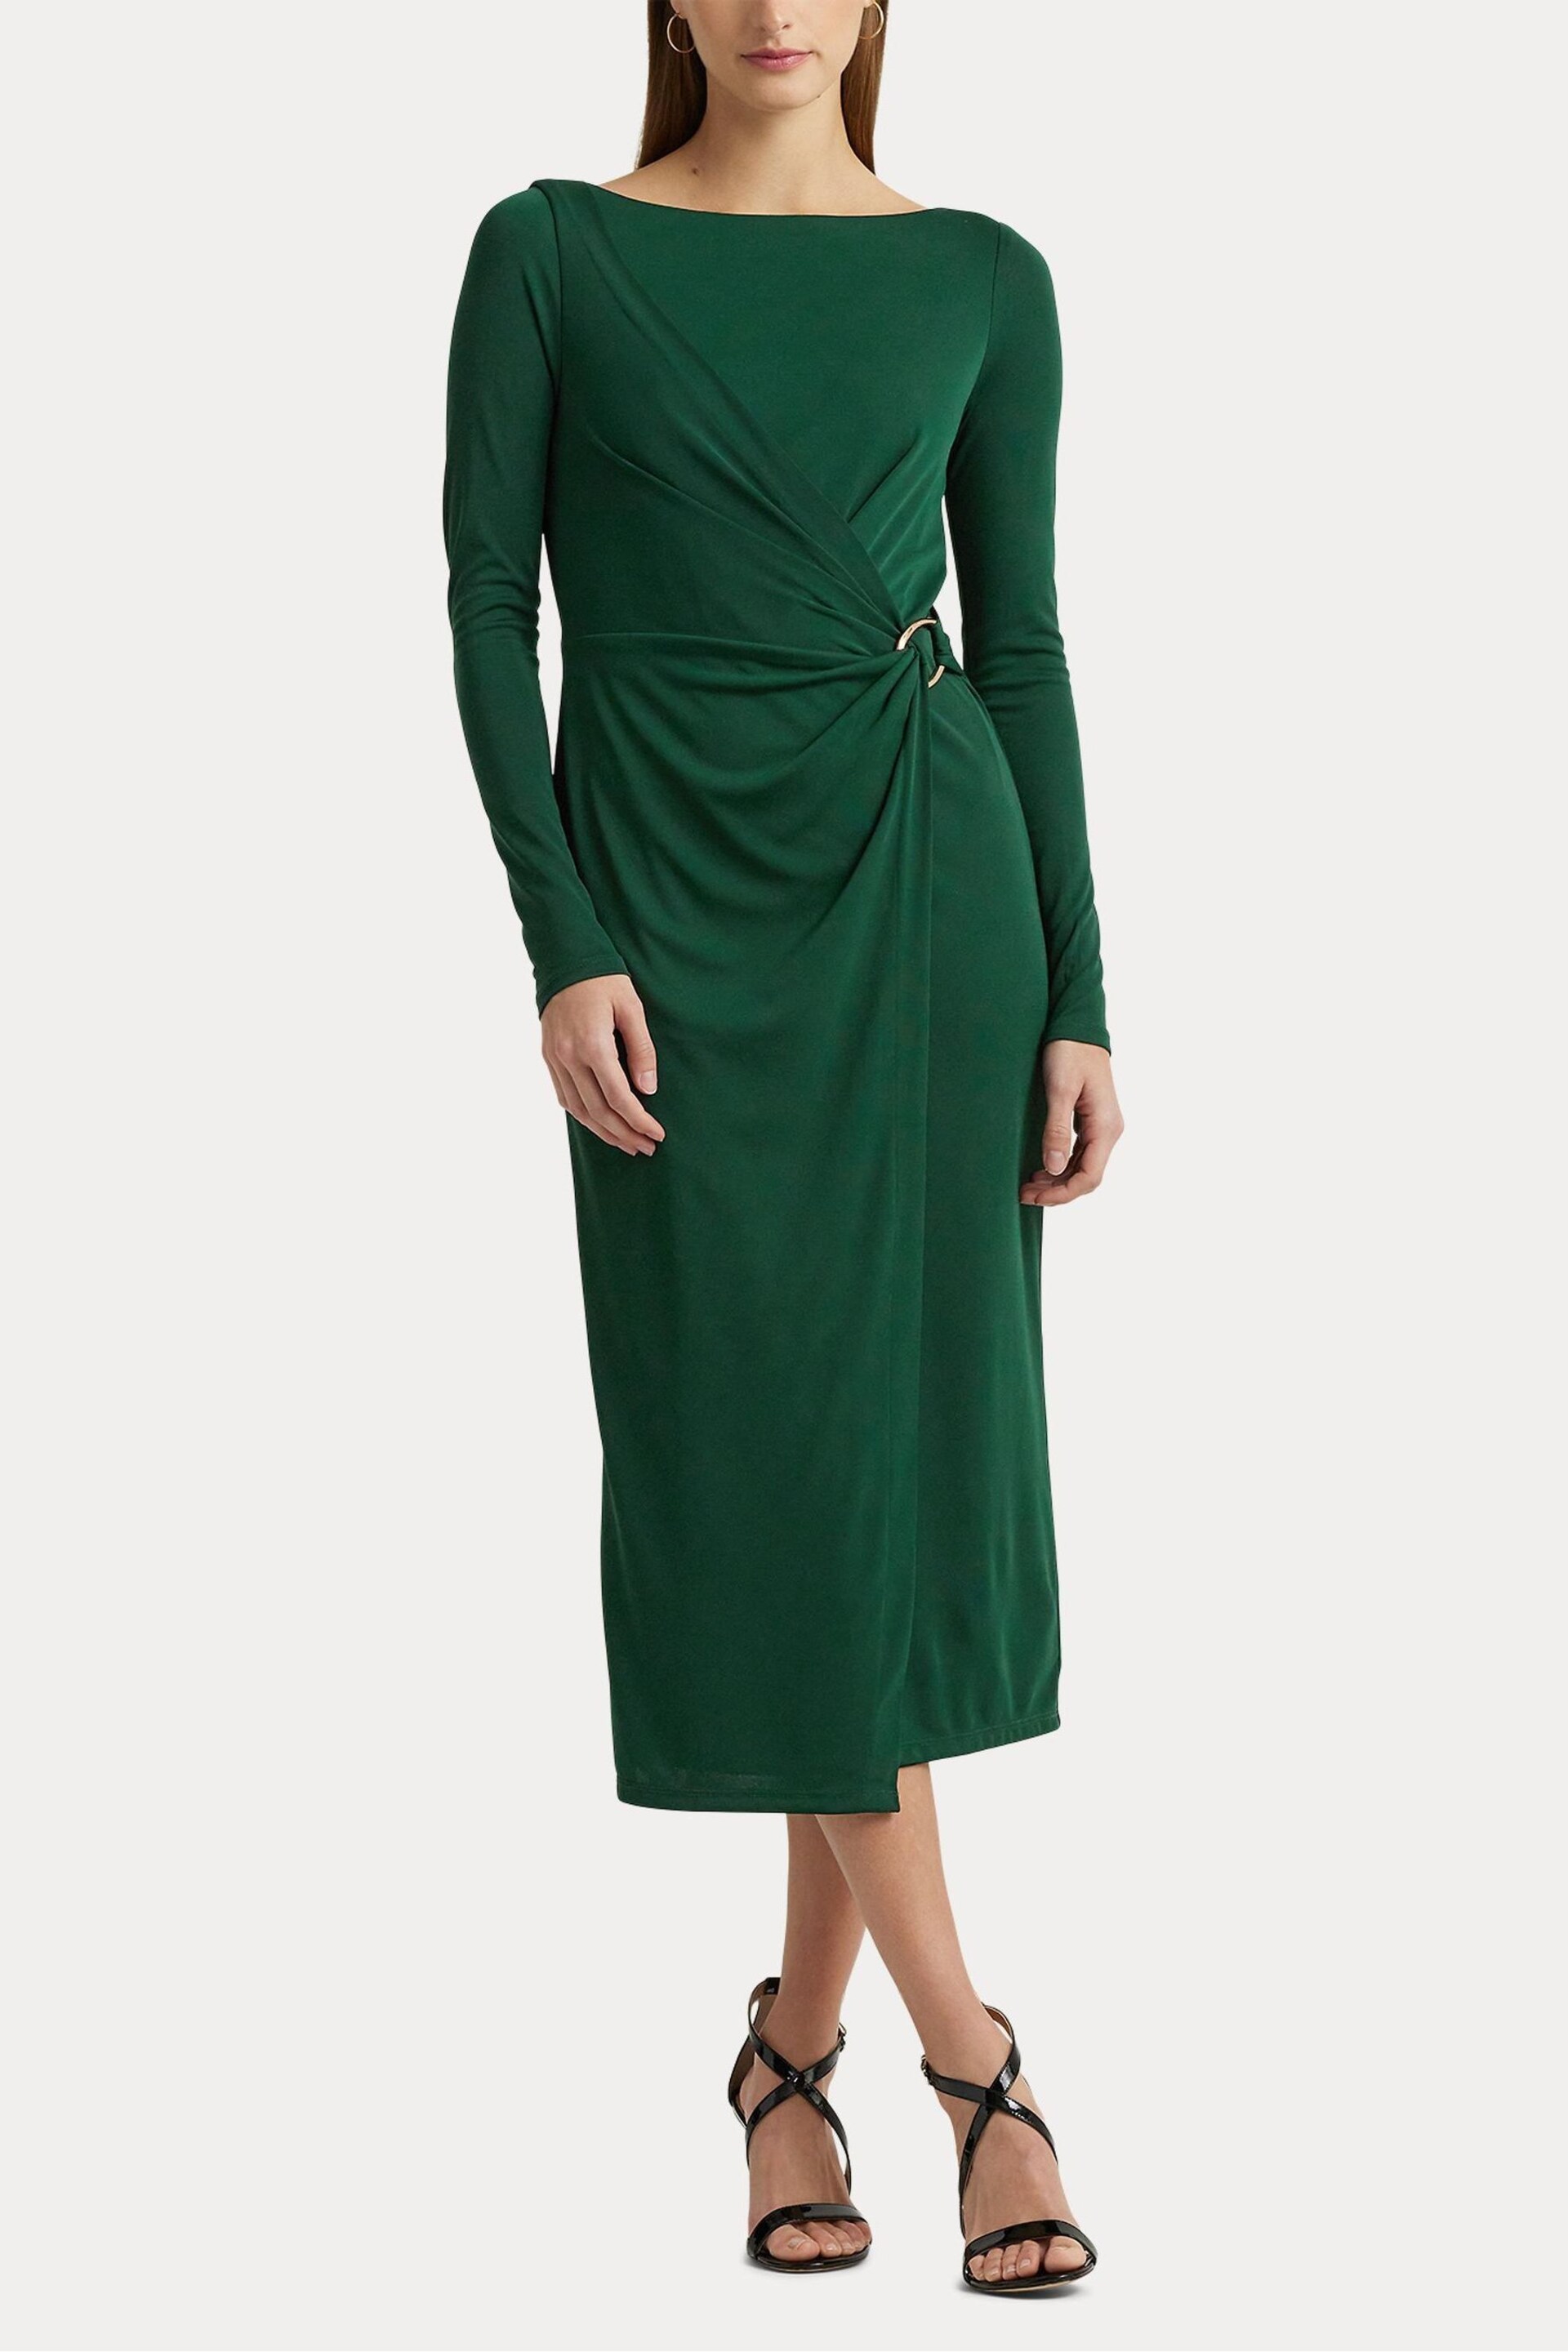 Lauren Ralph Lauren Green Jersey Long Sleeve Cocktail Dress - Image 3 of 8